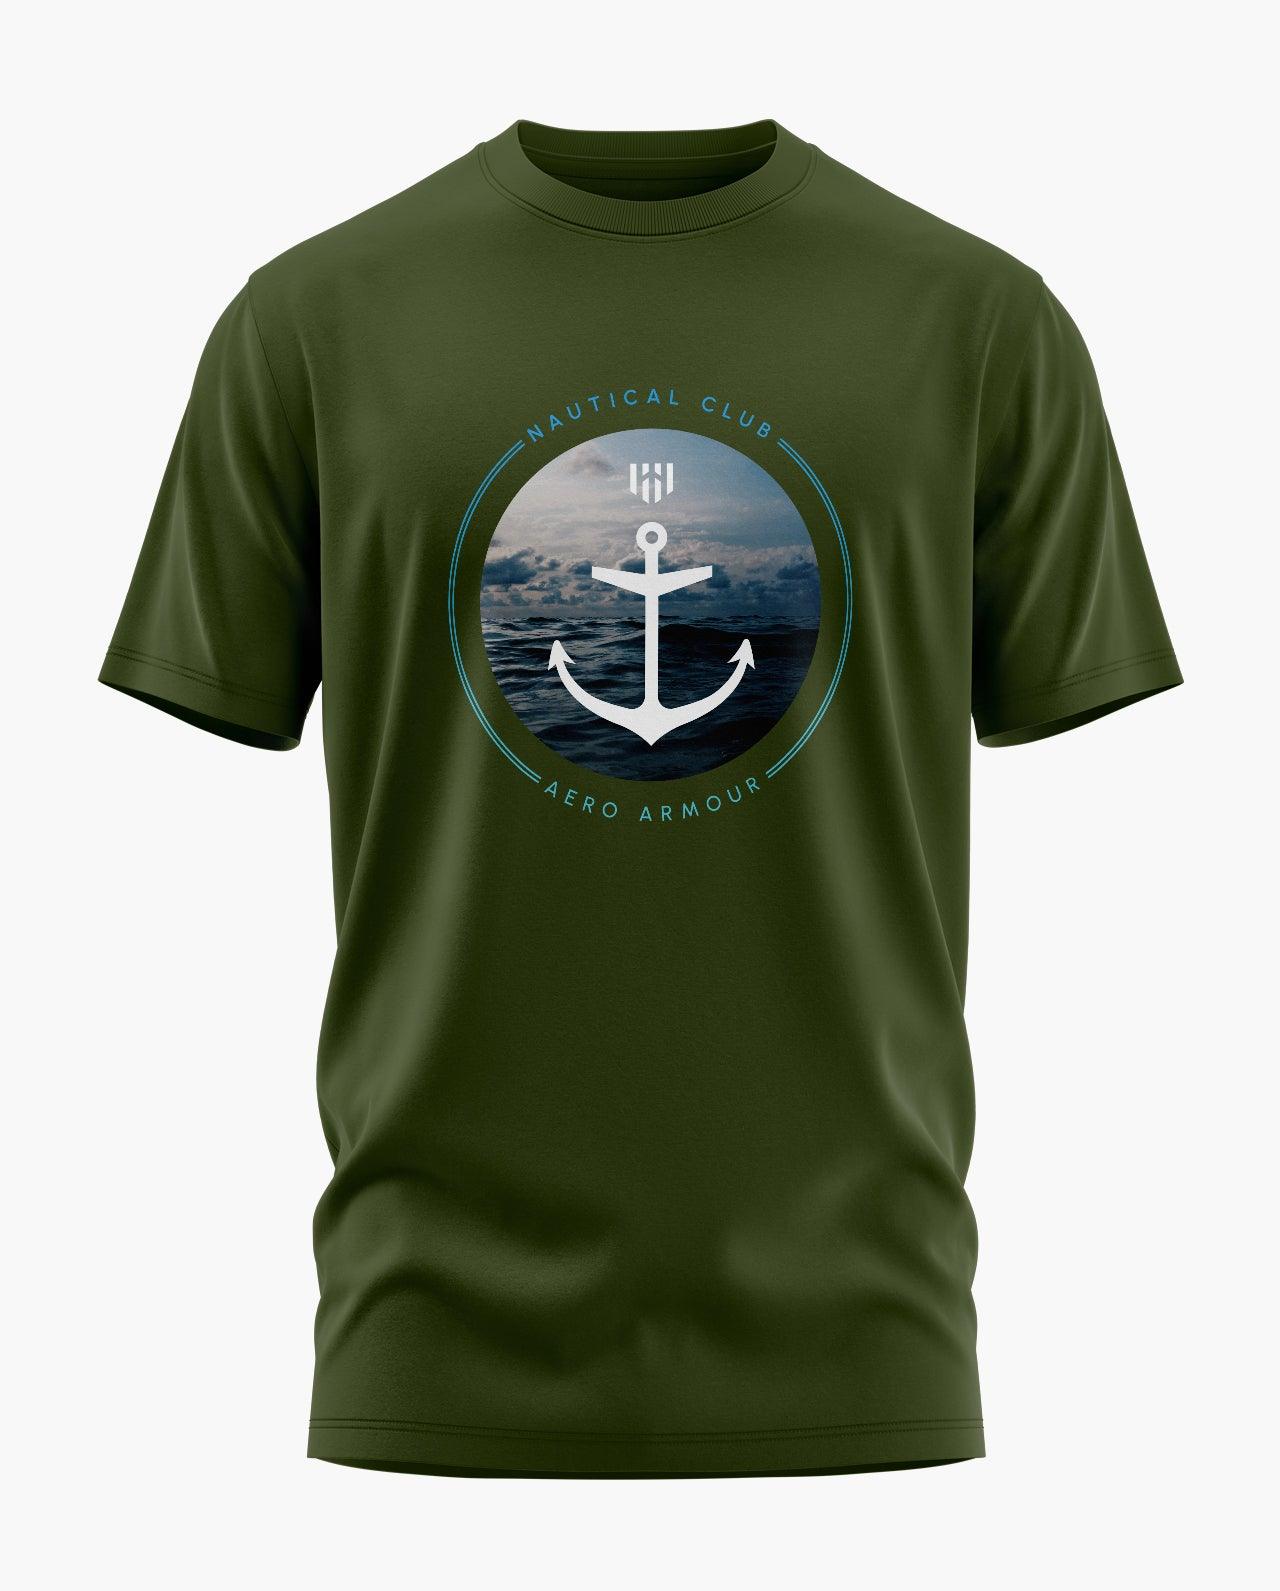 Nautical Club T-Shirt - Aero Armour